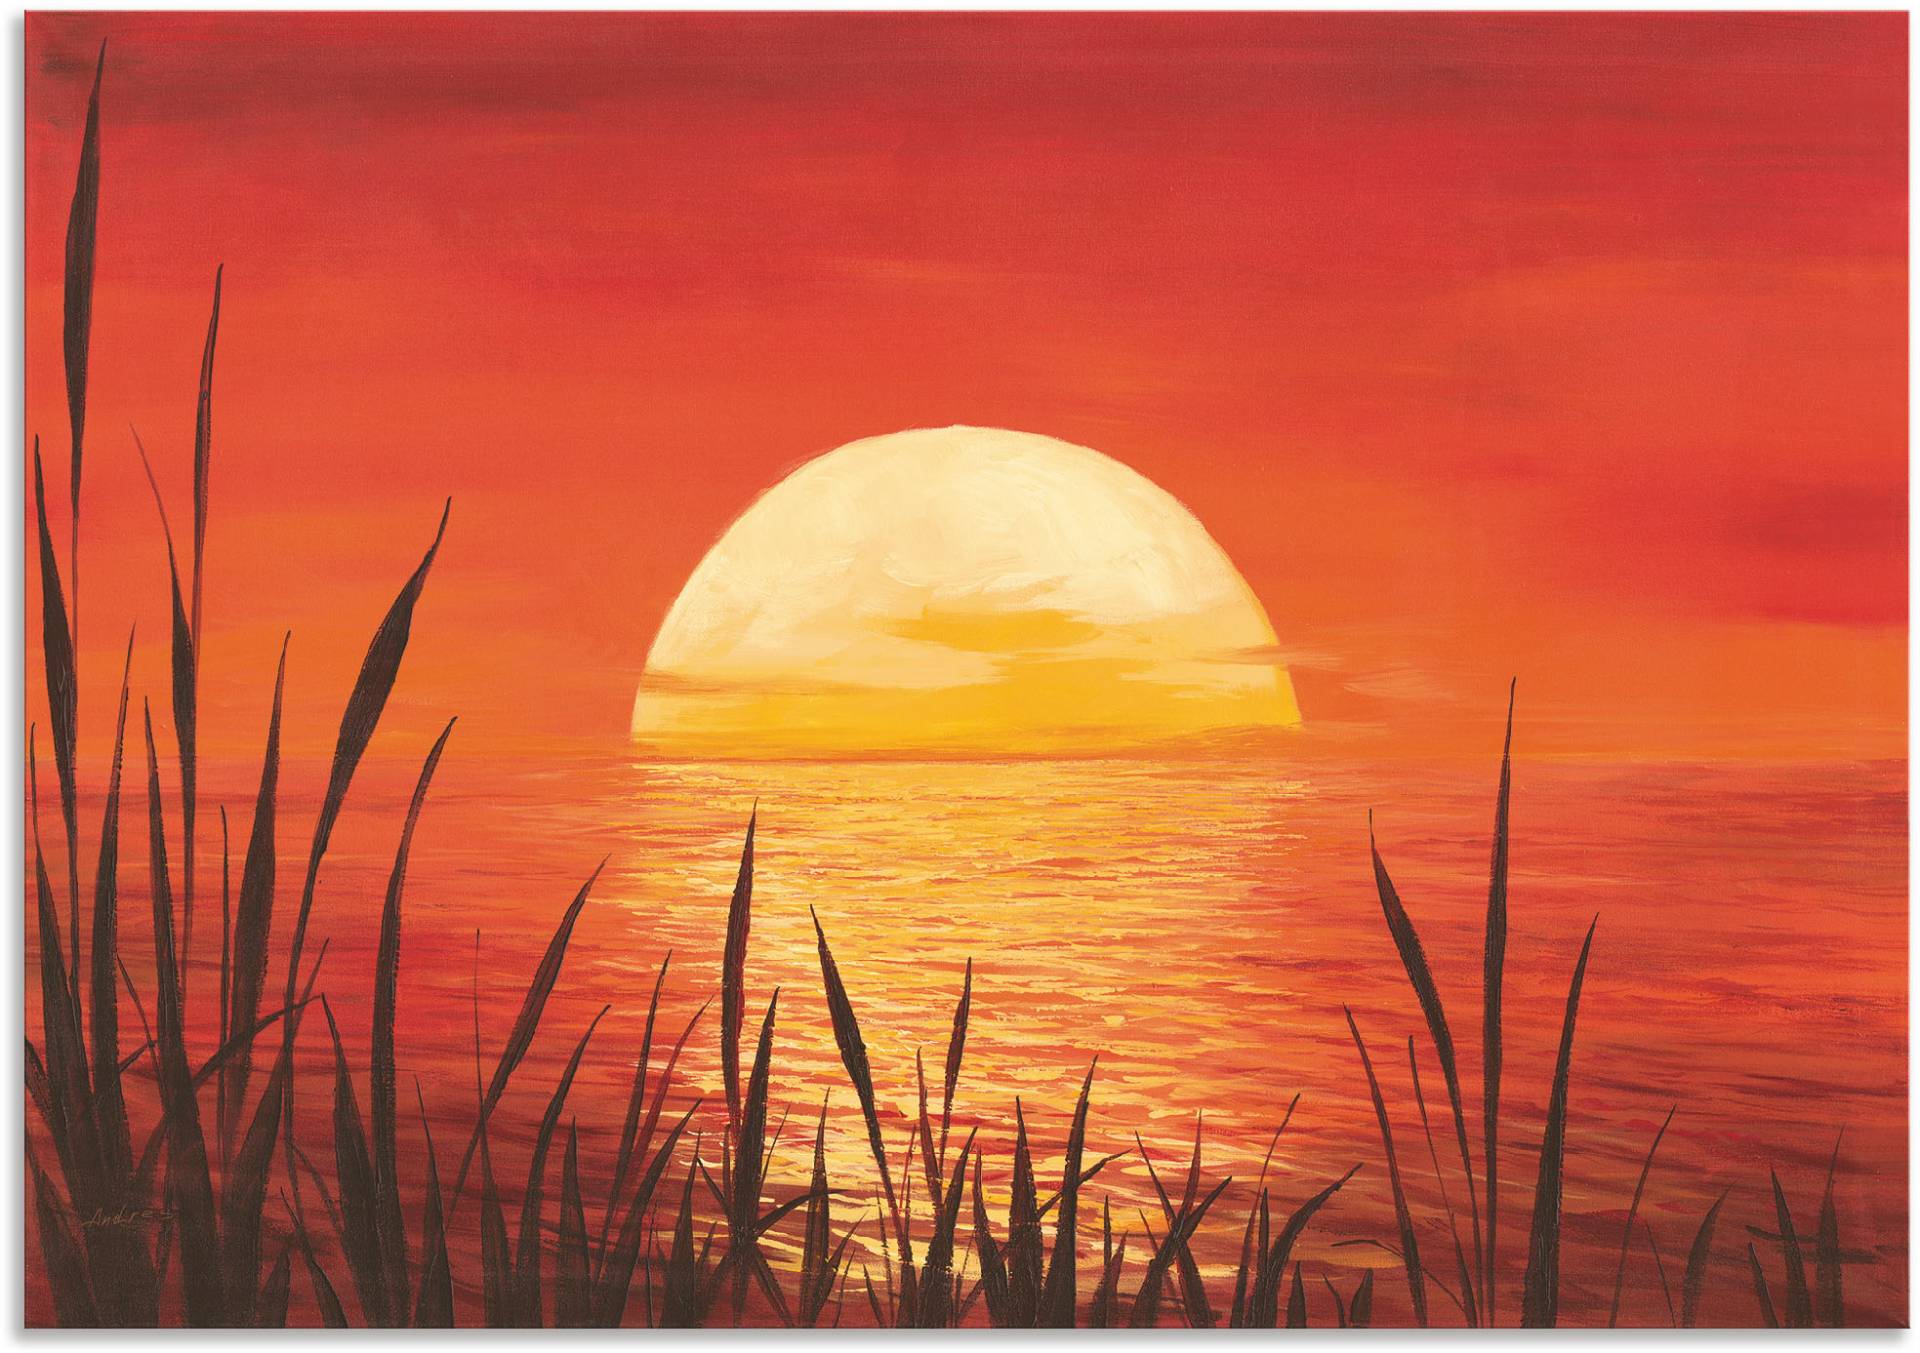 Artland Wandbild "Roter Sonnenuntergang am Ozean", Bilder vom Sonnenuntergang & -aufgang (1 Stück), in vielen Größen & Produktarten - Alubild / Outdoorbild, Leinwandbild, Poster, Wandaufkleber / Wandtattoo auch für Badezimmer geeignet von Artland